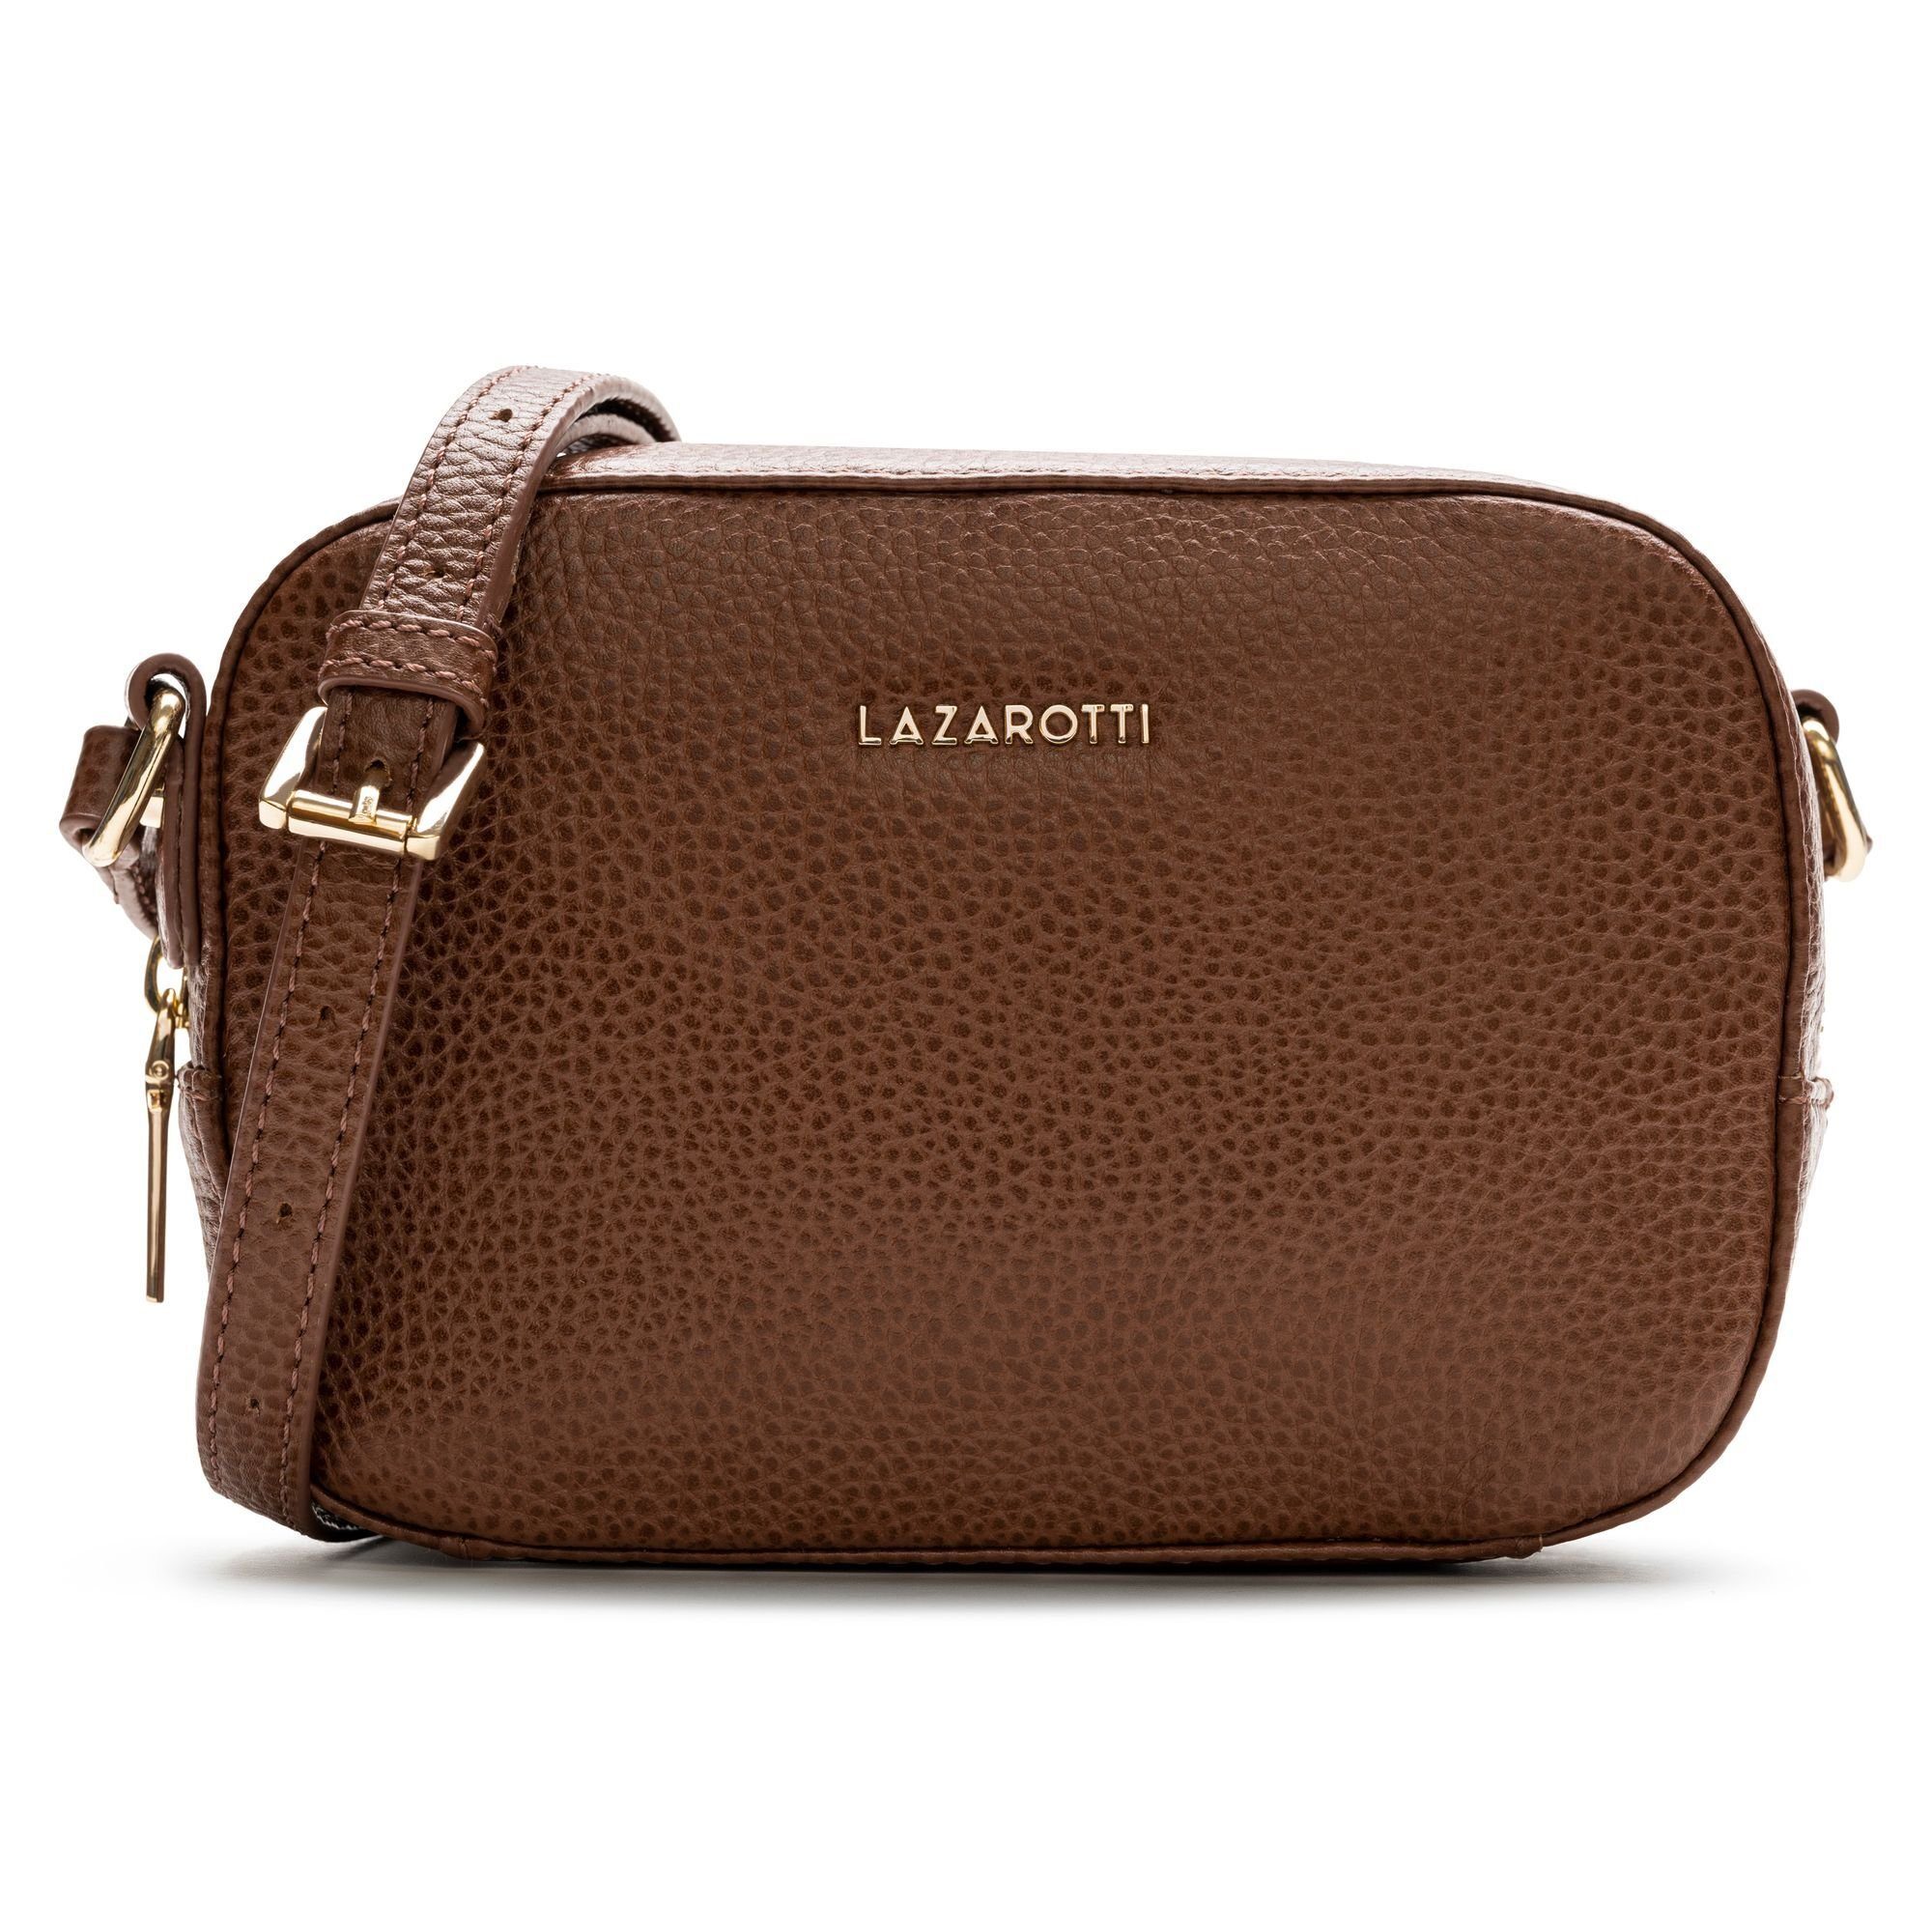 Bologna Leather, brown Leder Lazarotti Umhängetasche